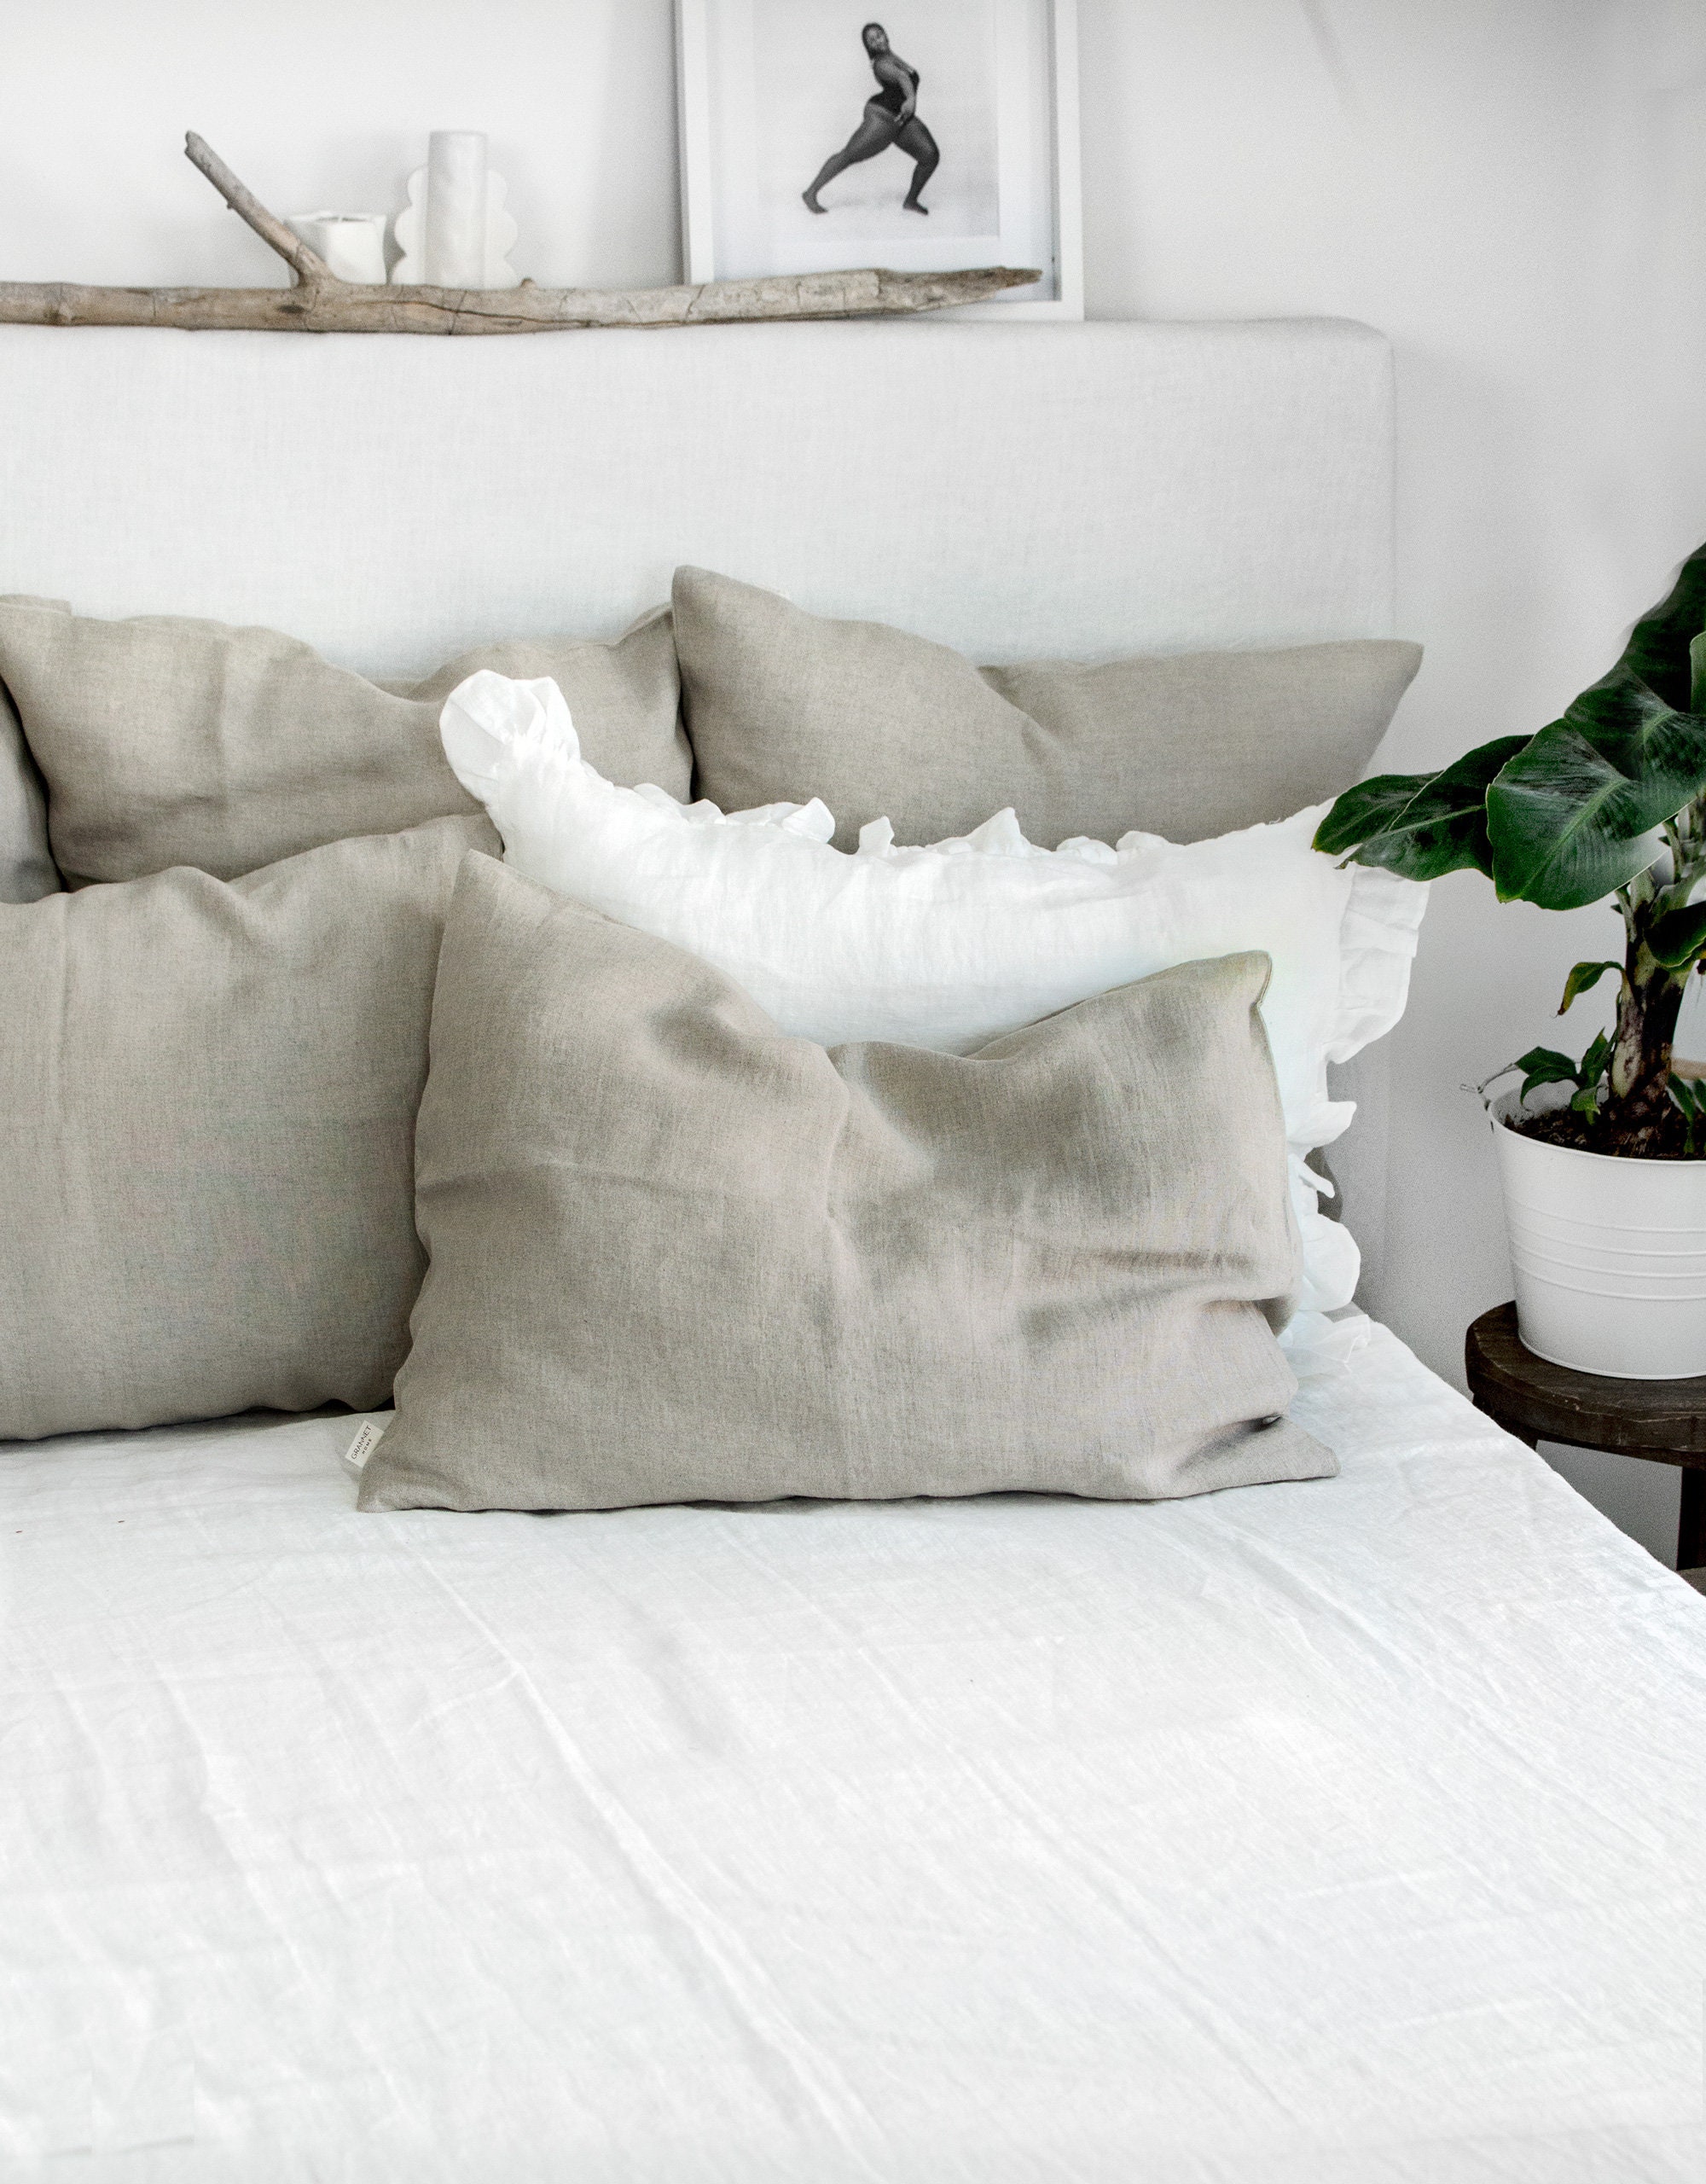 Extra long lumbar pillow cover - natural undyed linen (flax)